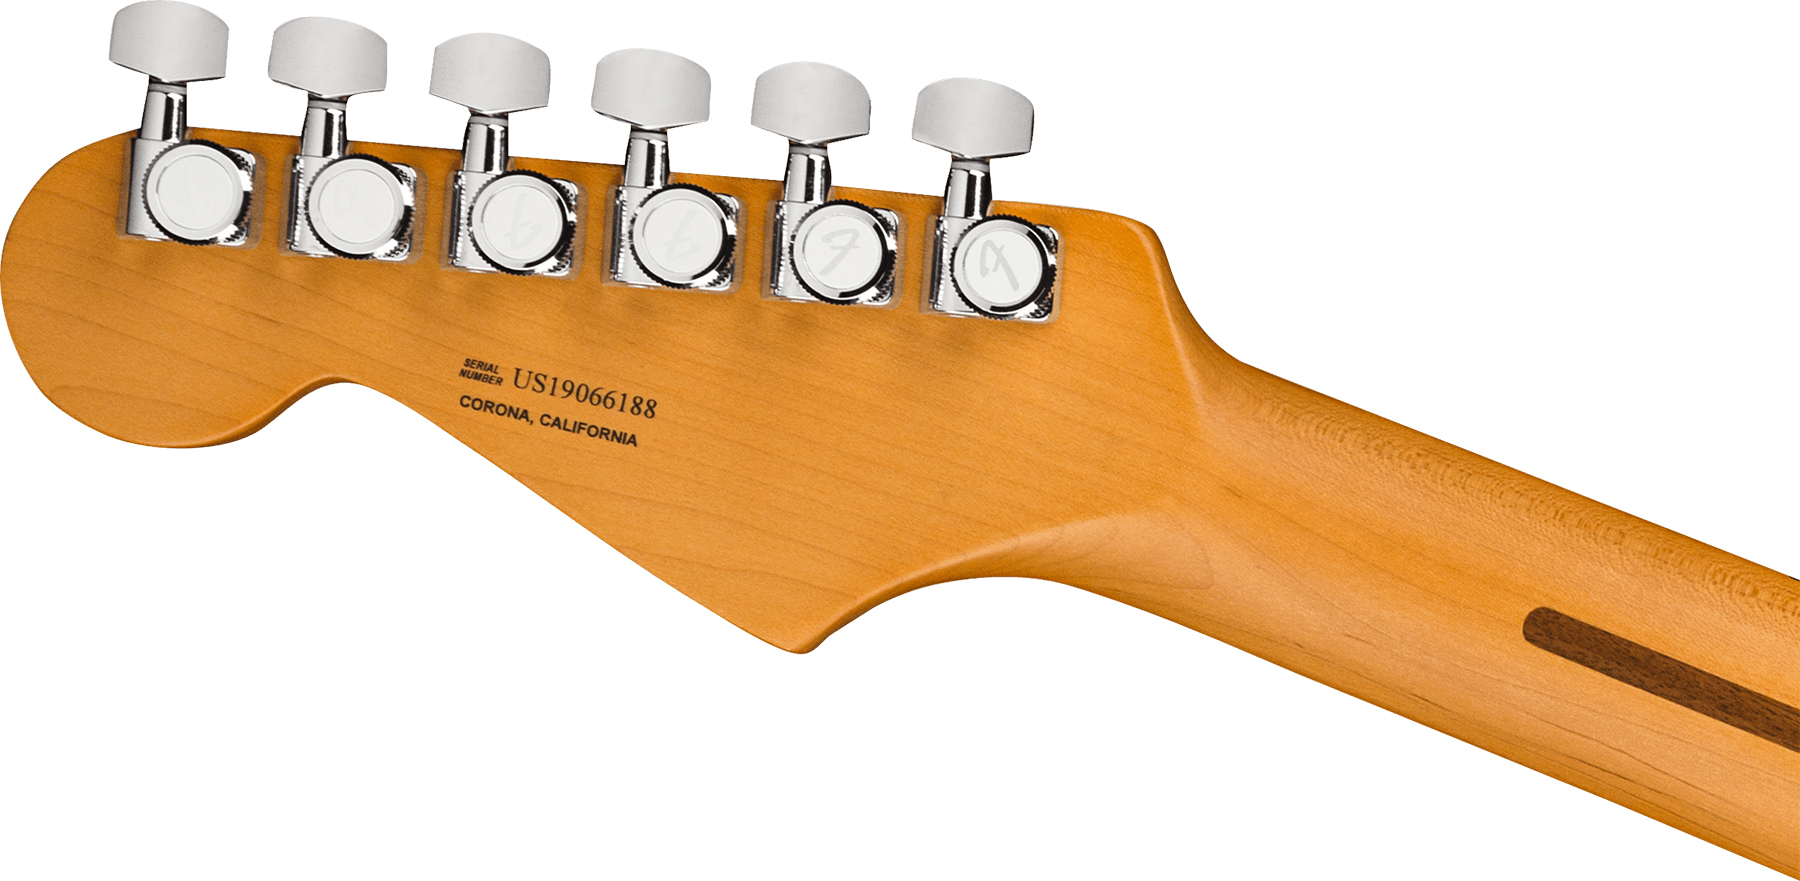 Fender Strat American Ultra 2019 Usa Mn - Texas Tea - Str shape electric guitar - Variation 3